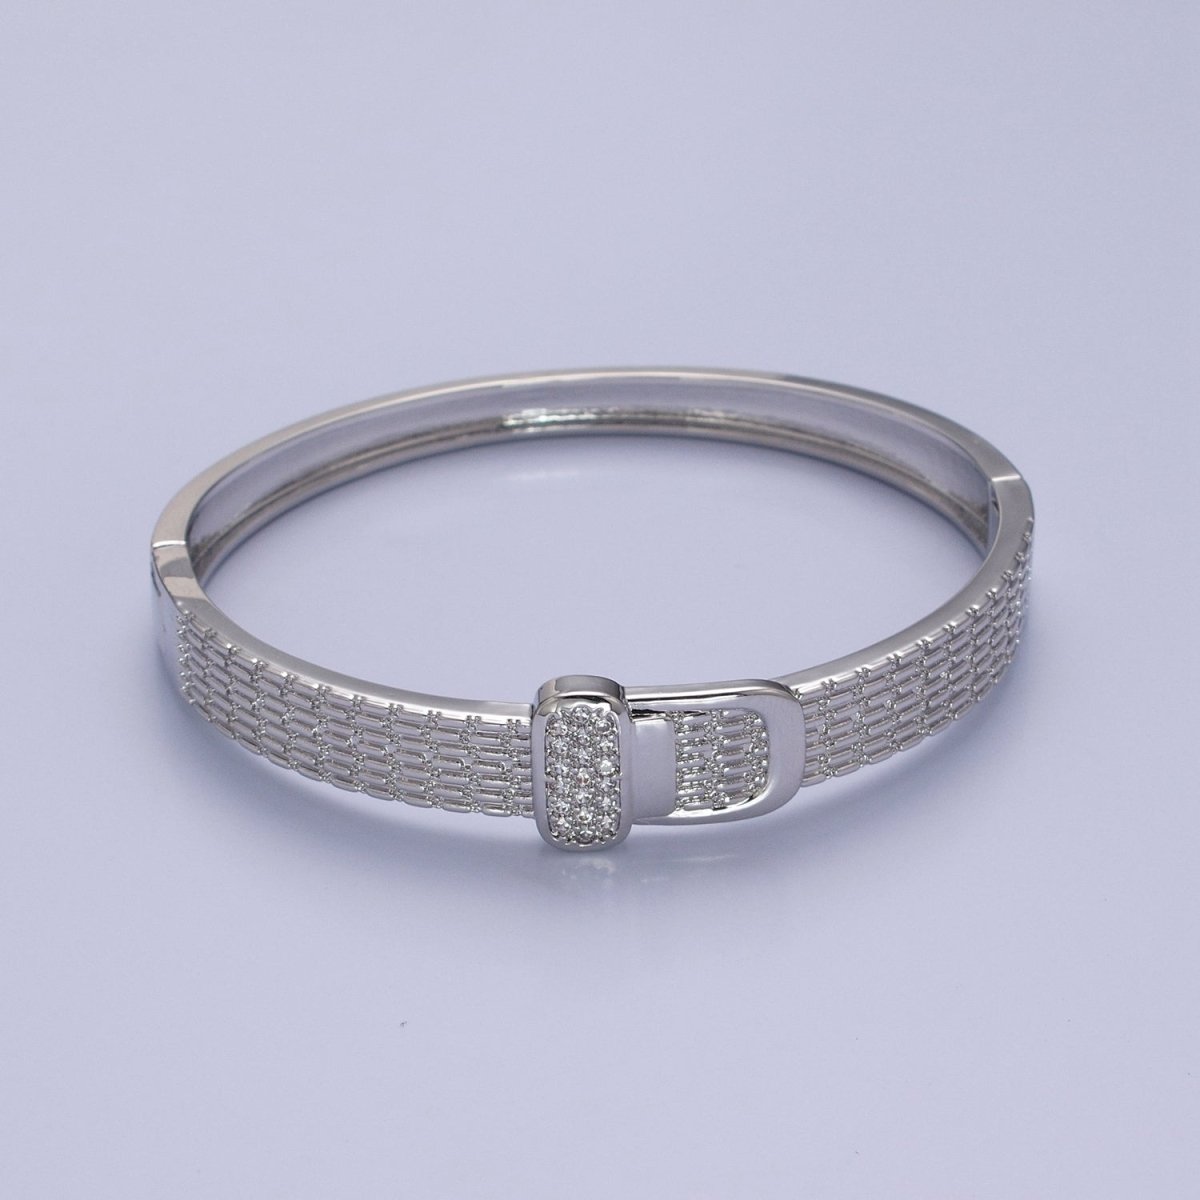 Belt Buckle Bracelet, Gold Bangle Bracelet, Minimalist Gold Bracelet, Stacking Silver Bangle Bracelet Jewelry | WA-951 WA-952 Clearance Pricing - DLUXCA